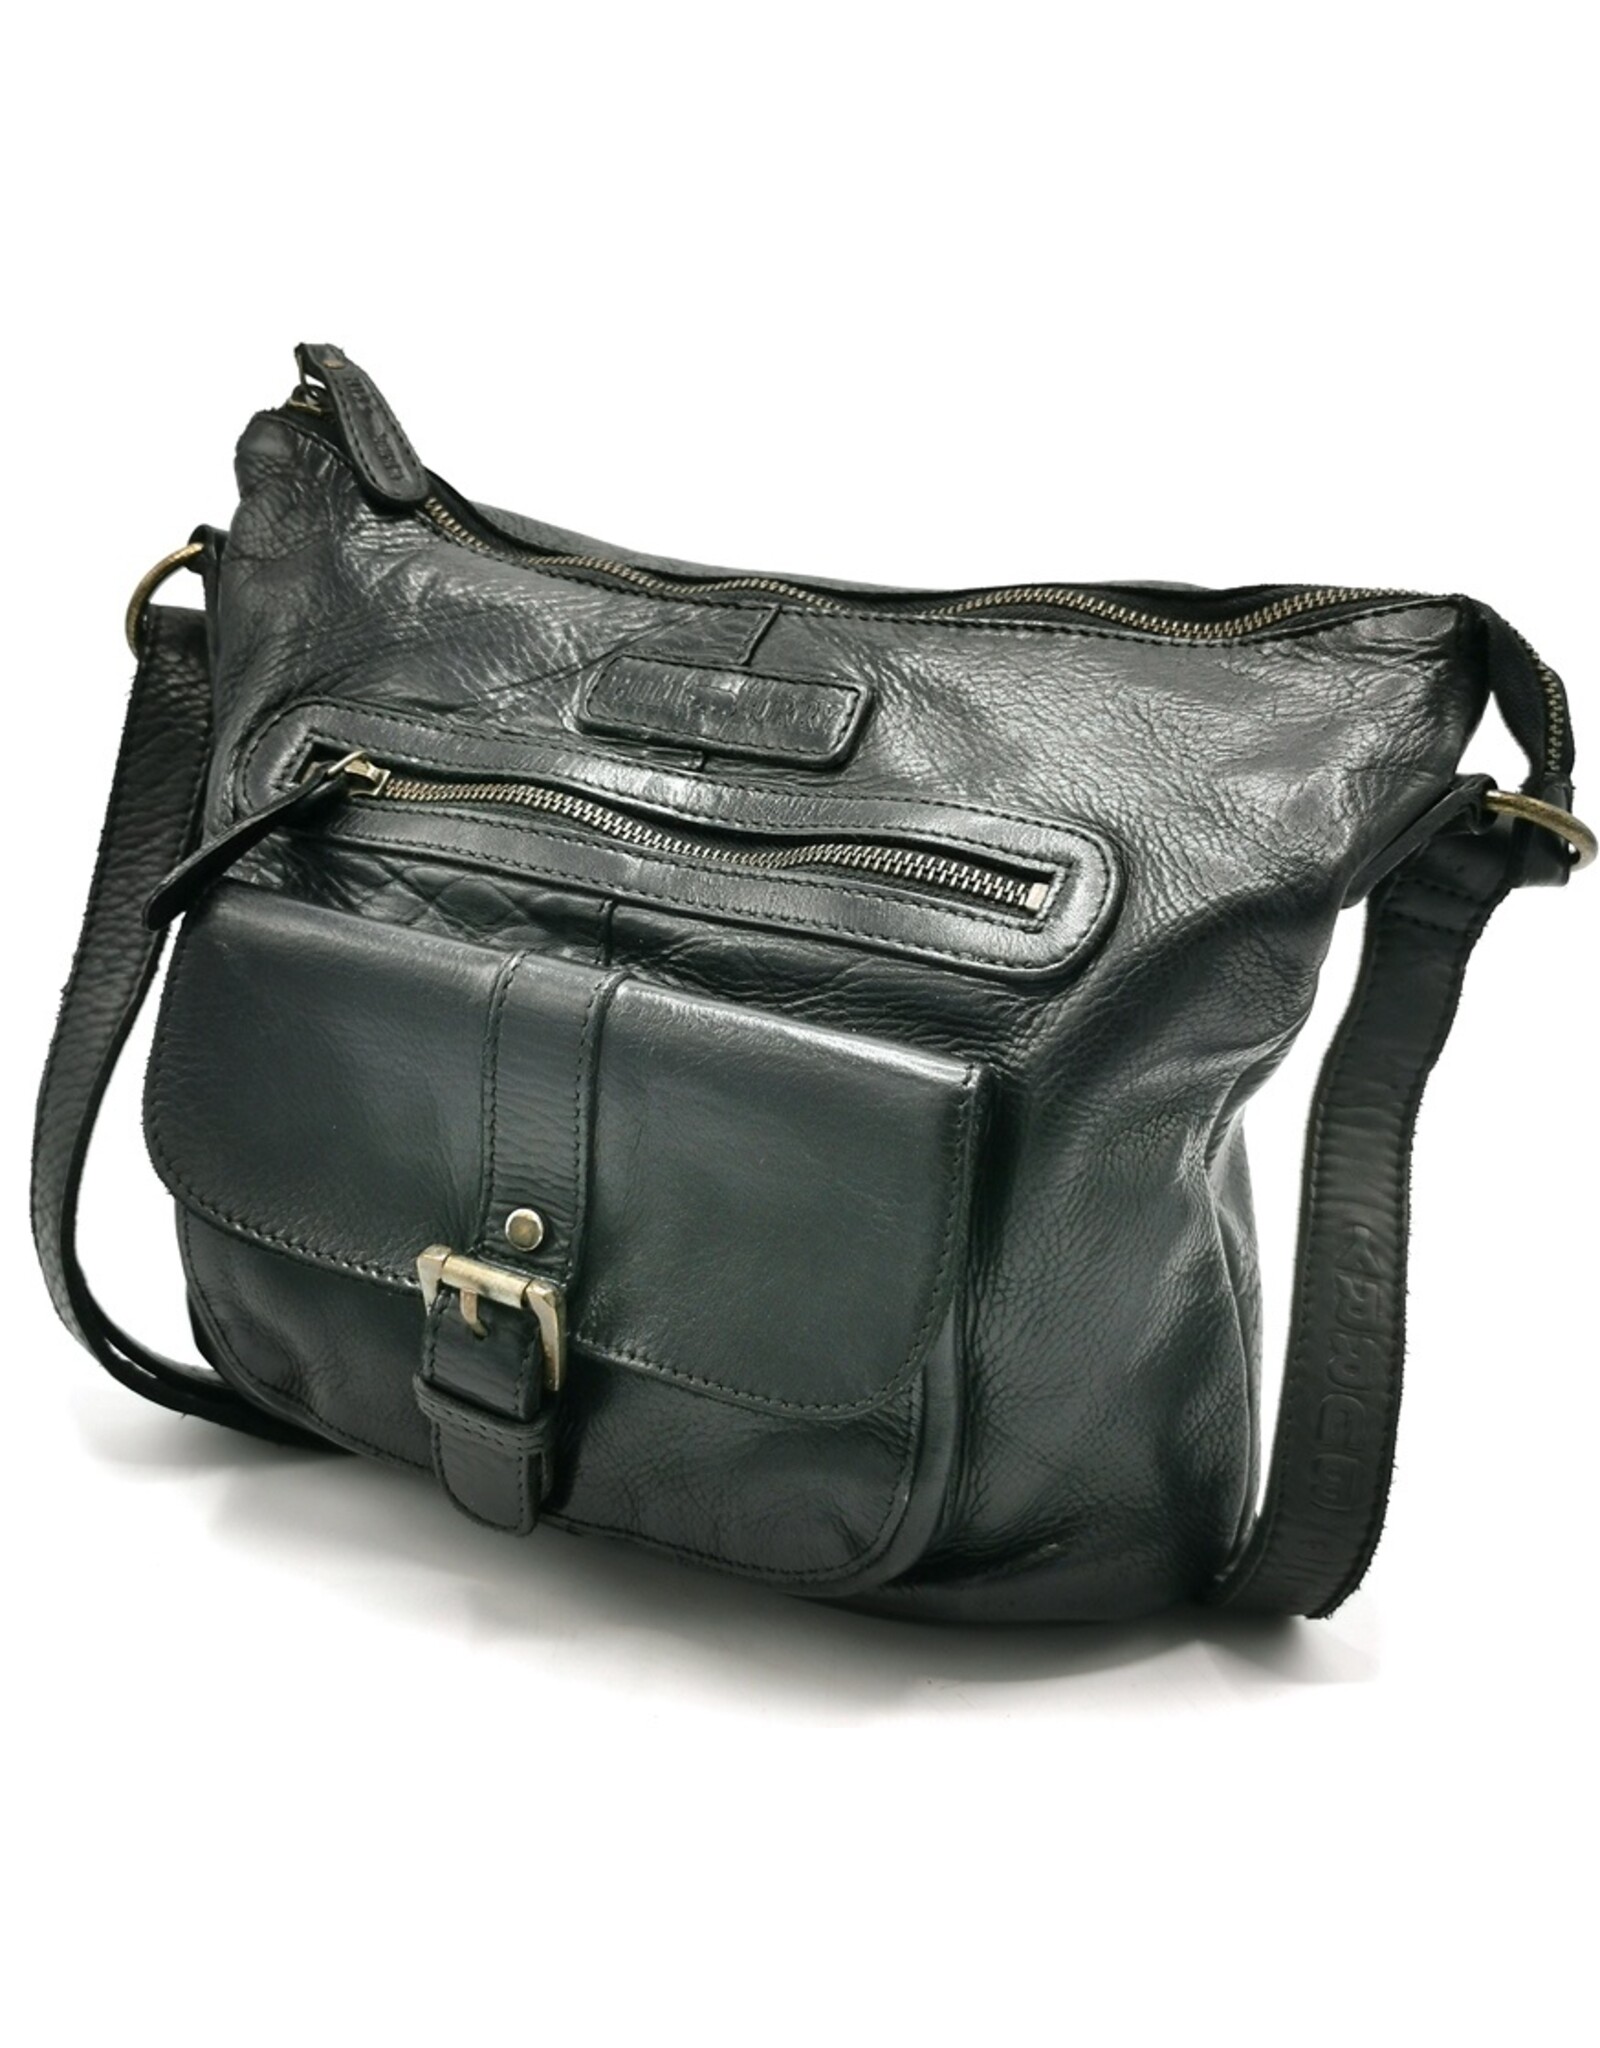 HillBurry Leather bags - Hillburry Shoulder Bag Washed Leather black